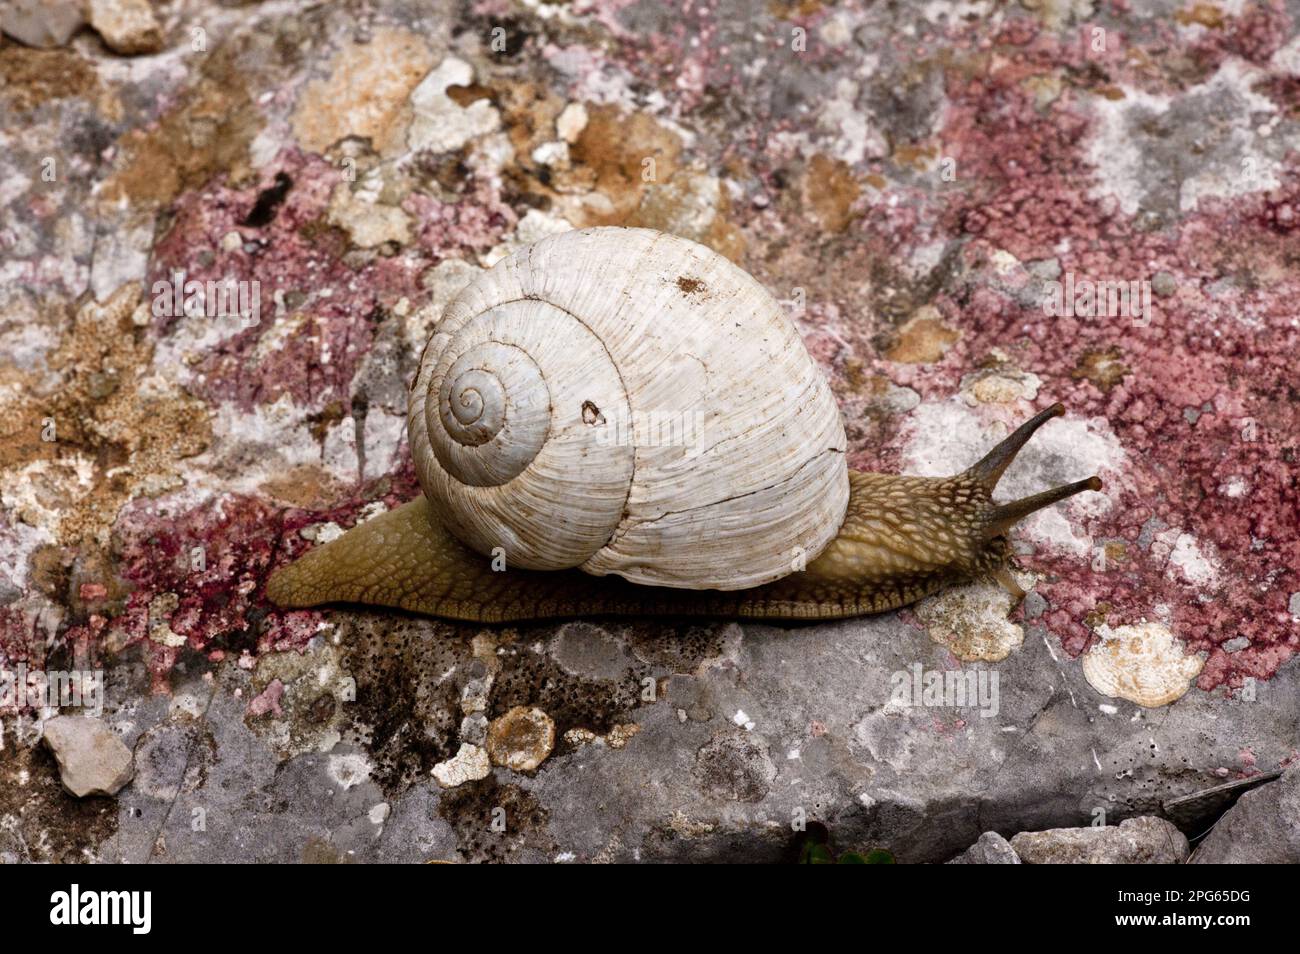 Roman snail, burgundy snails (Helix pomatia), Other animals, Snails, Animals, Molluscs, Edible snail adult, feeding on lichens, on limestone, Vikos Stock Photo